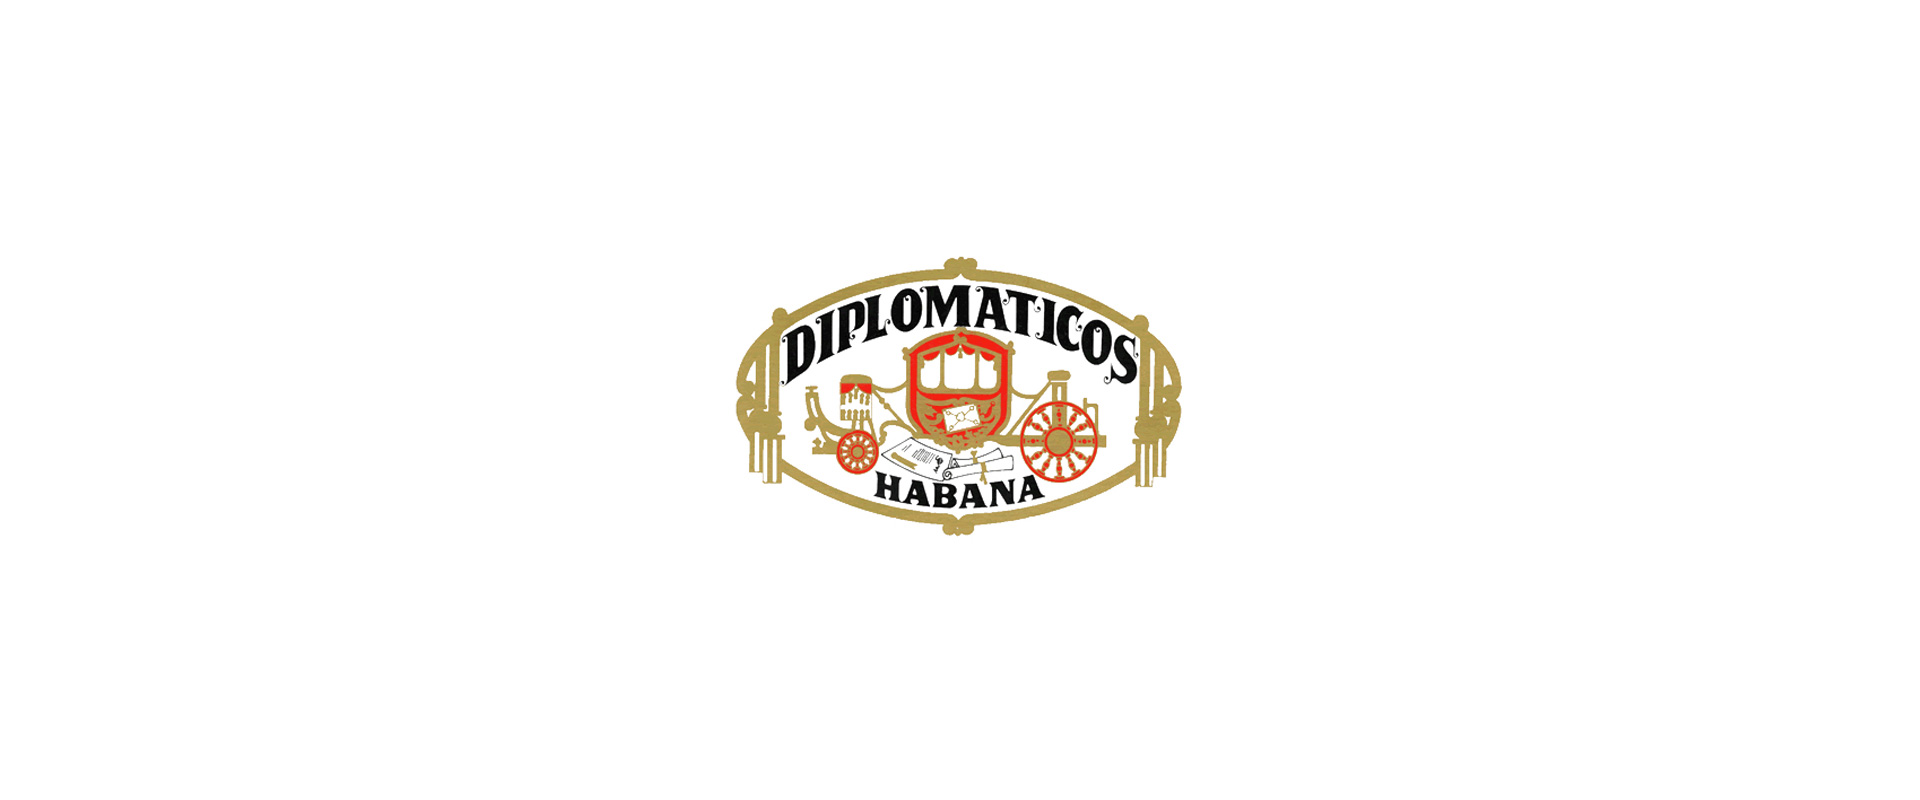 Cuban Cigars > Diplomaticos